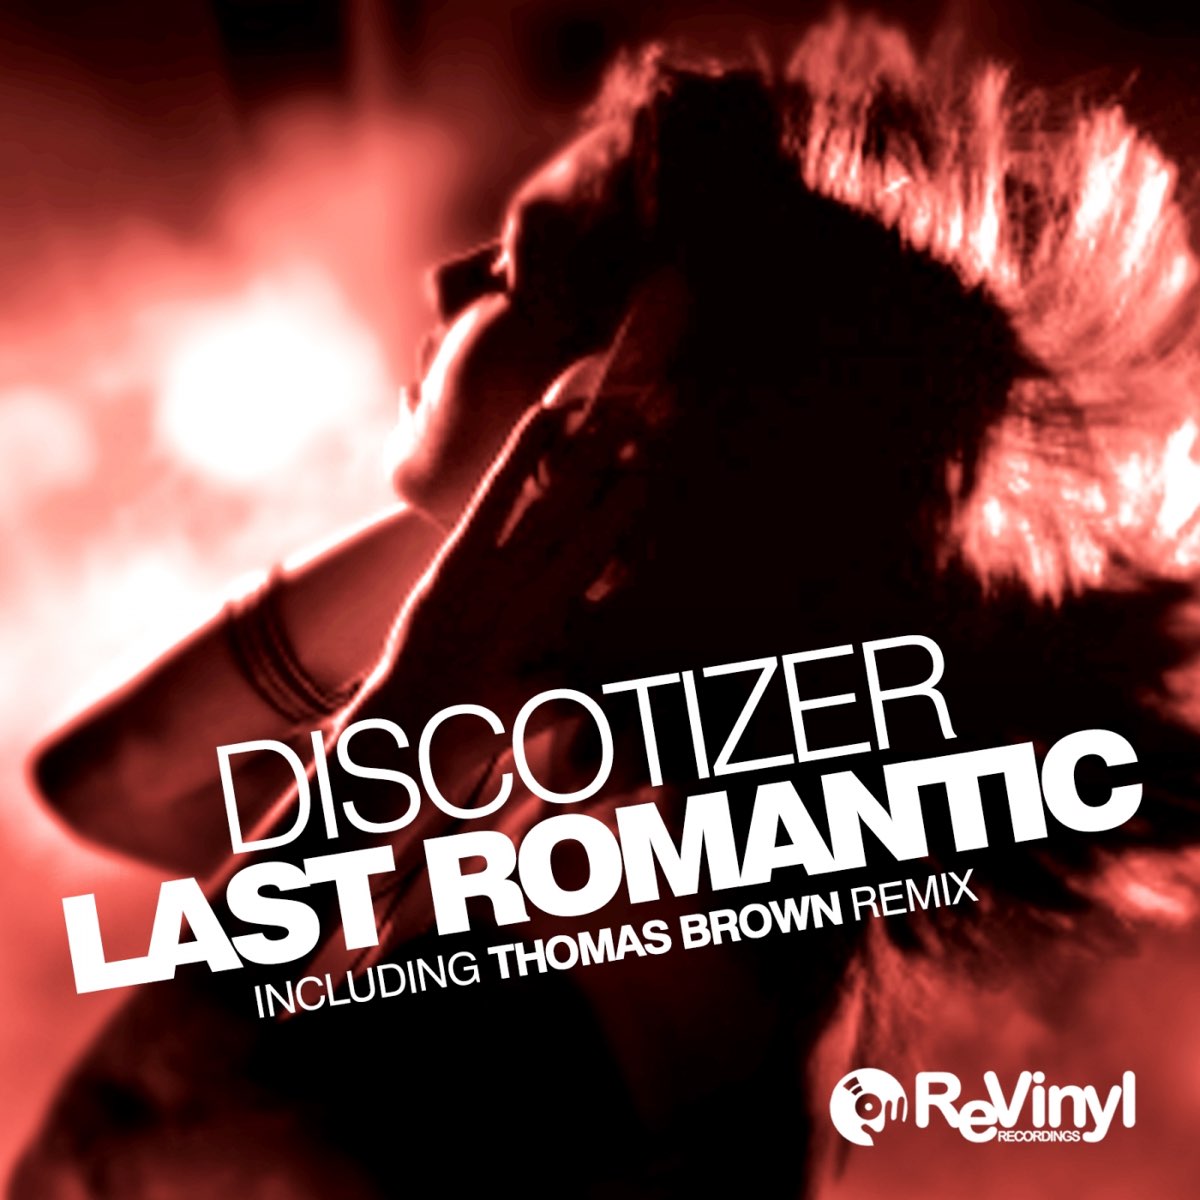 Last romance. The last Romance. ROMA Vinyl. The last Romantic.